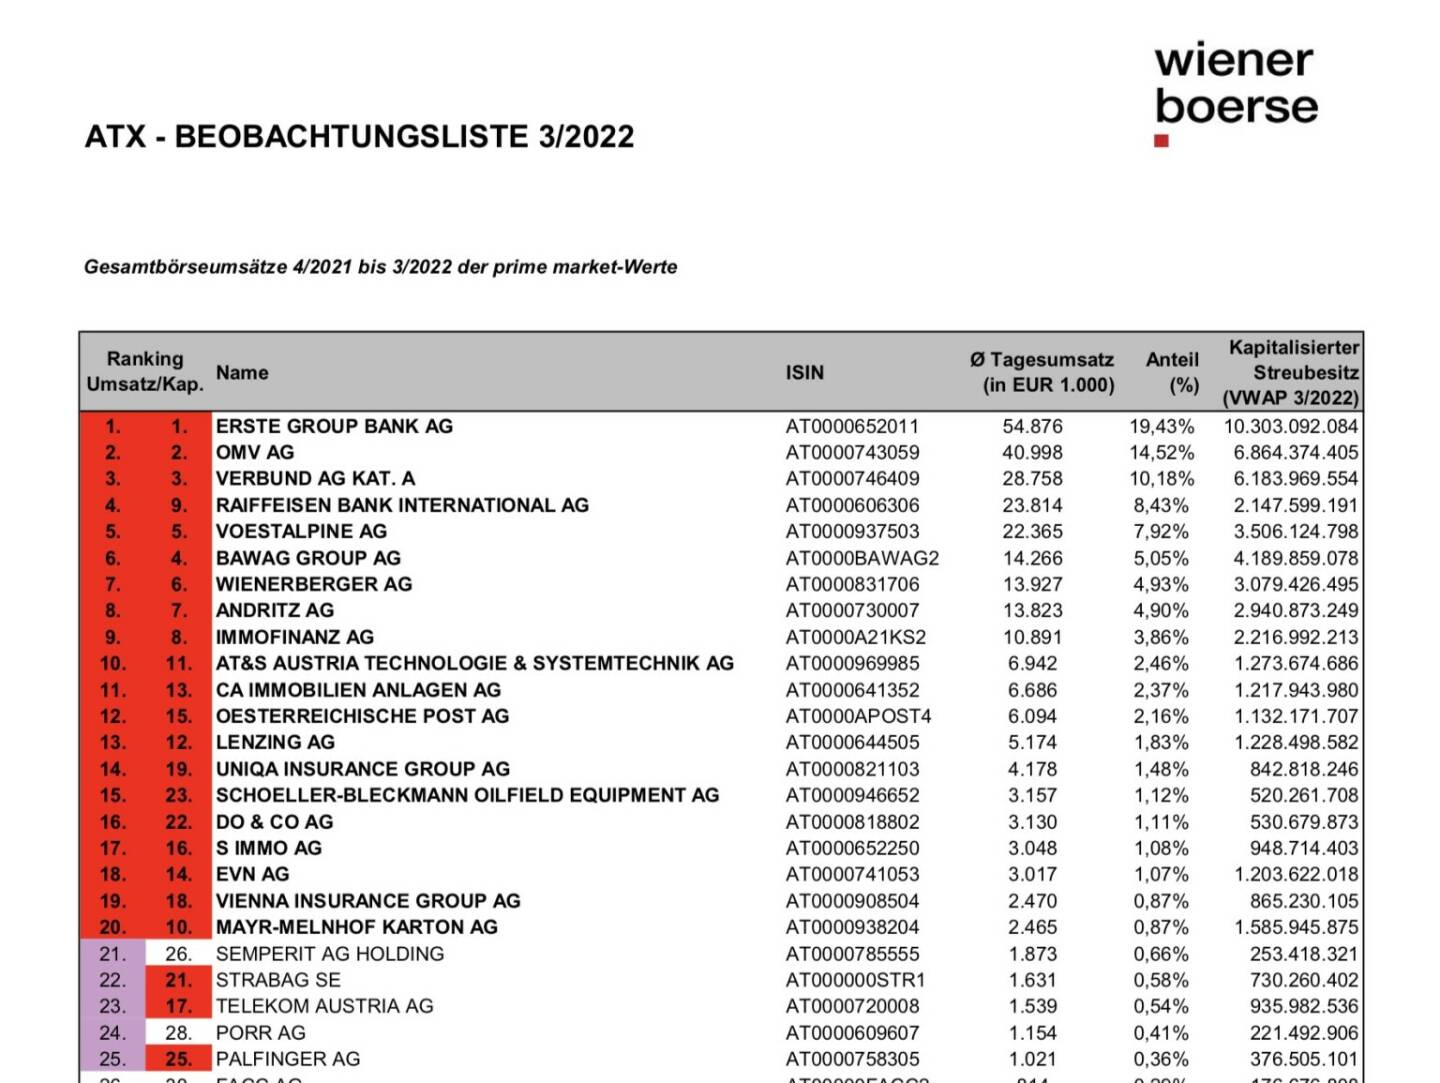 ATX Beobachtungsliste 3/2022 (c) Wiener Börse